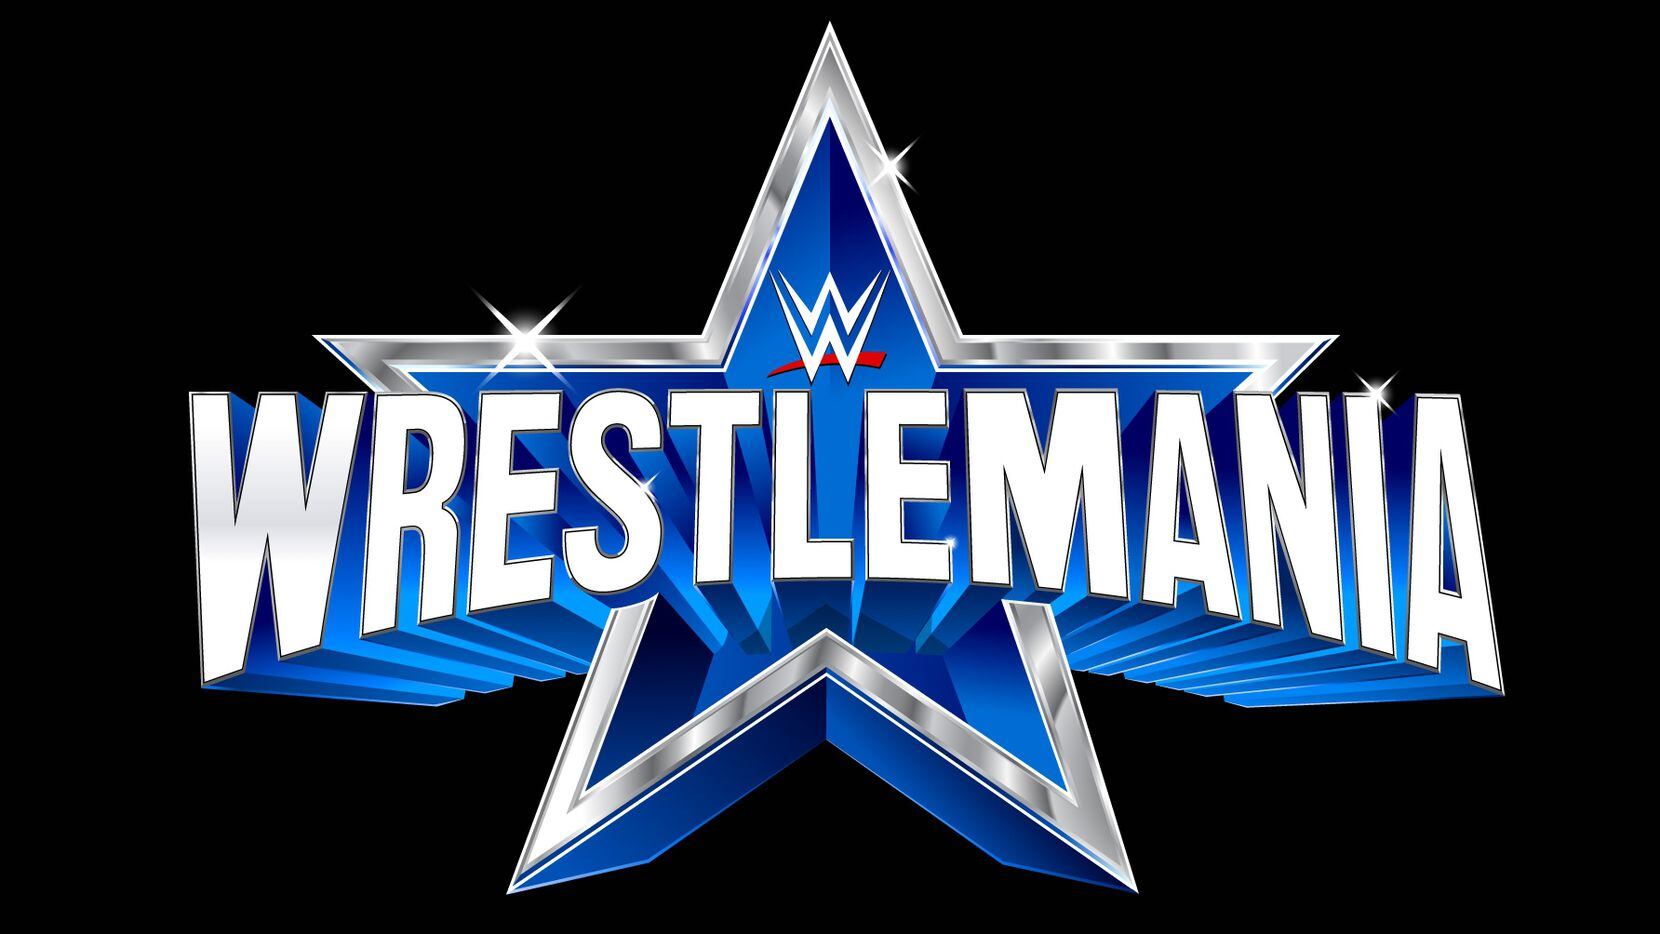 A sneak peek at WWE's WrestleMania 38 logo.